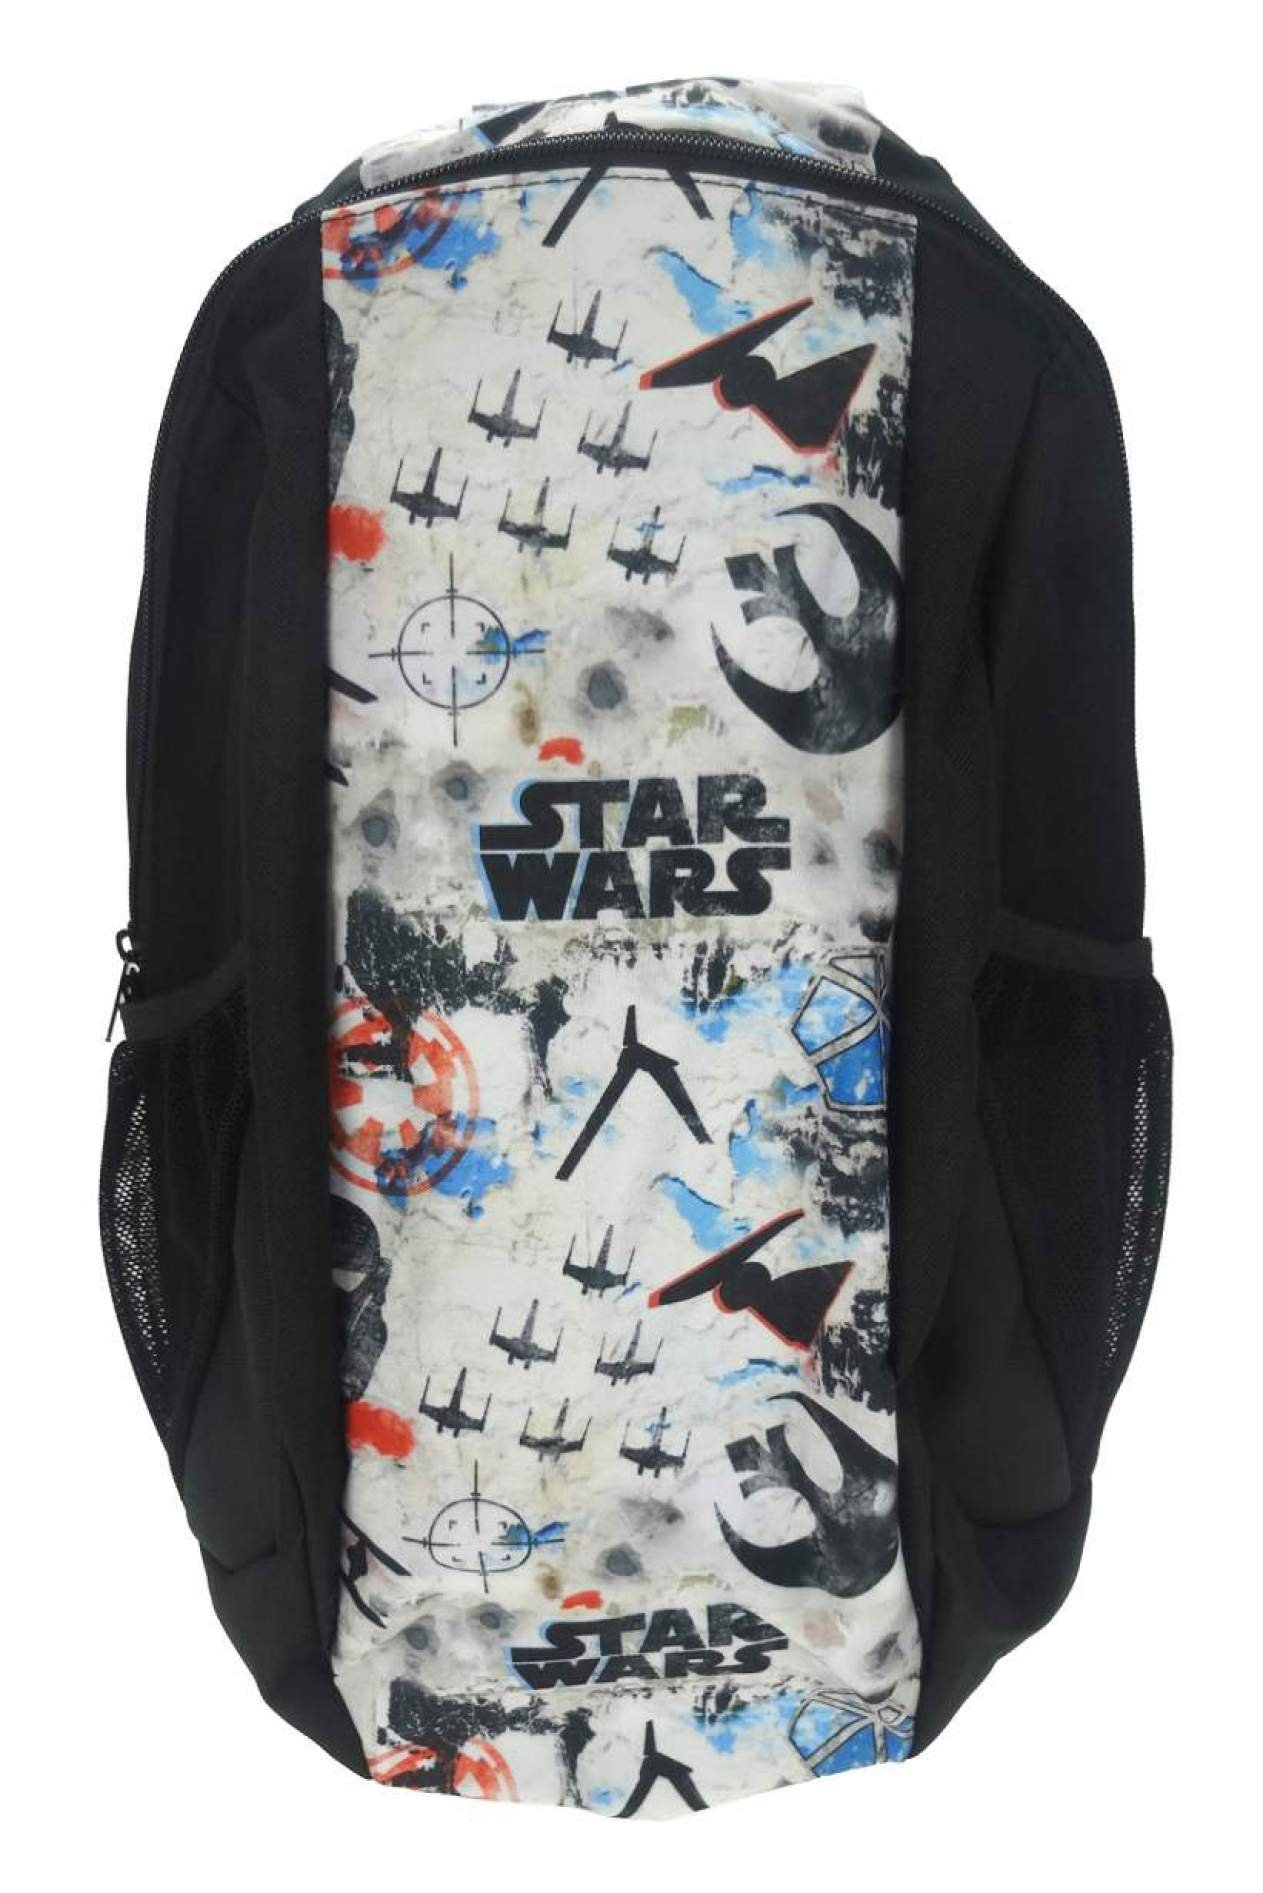 Disney Star Wars Rogue One 'Galactic' Urban School Bag Rucksack Backpack